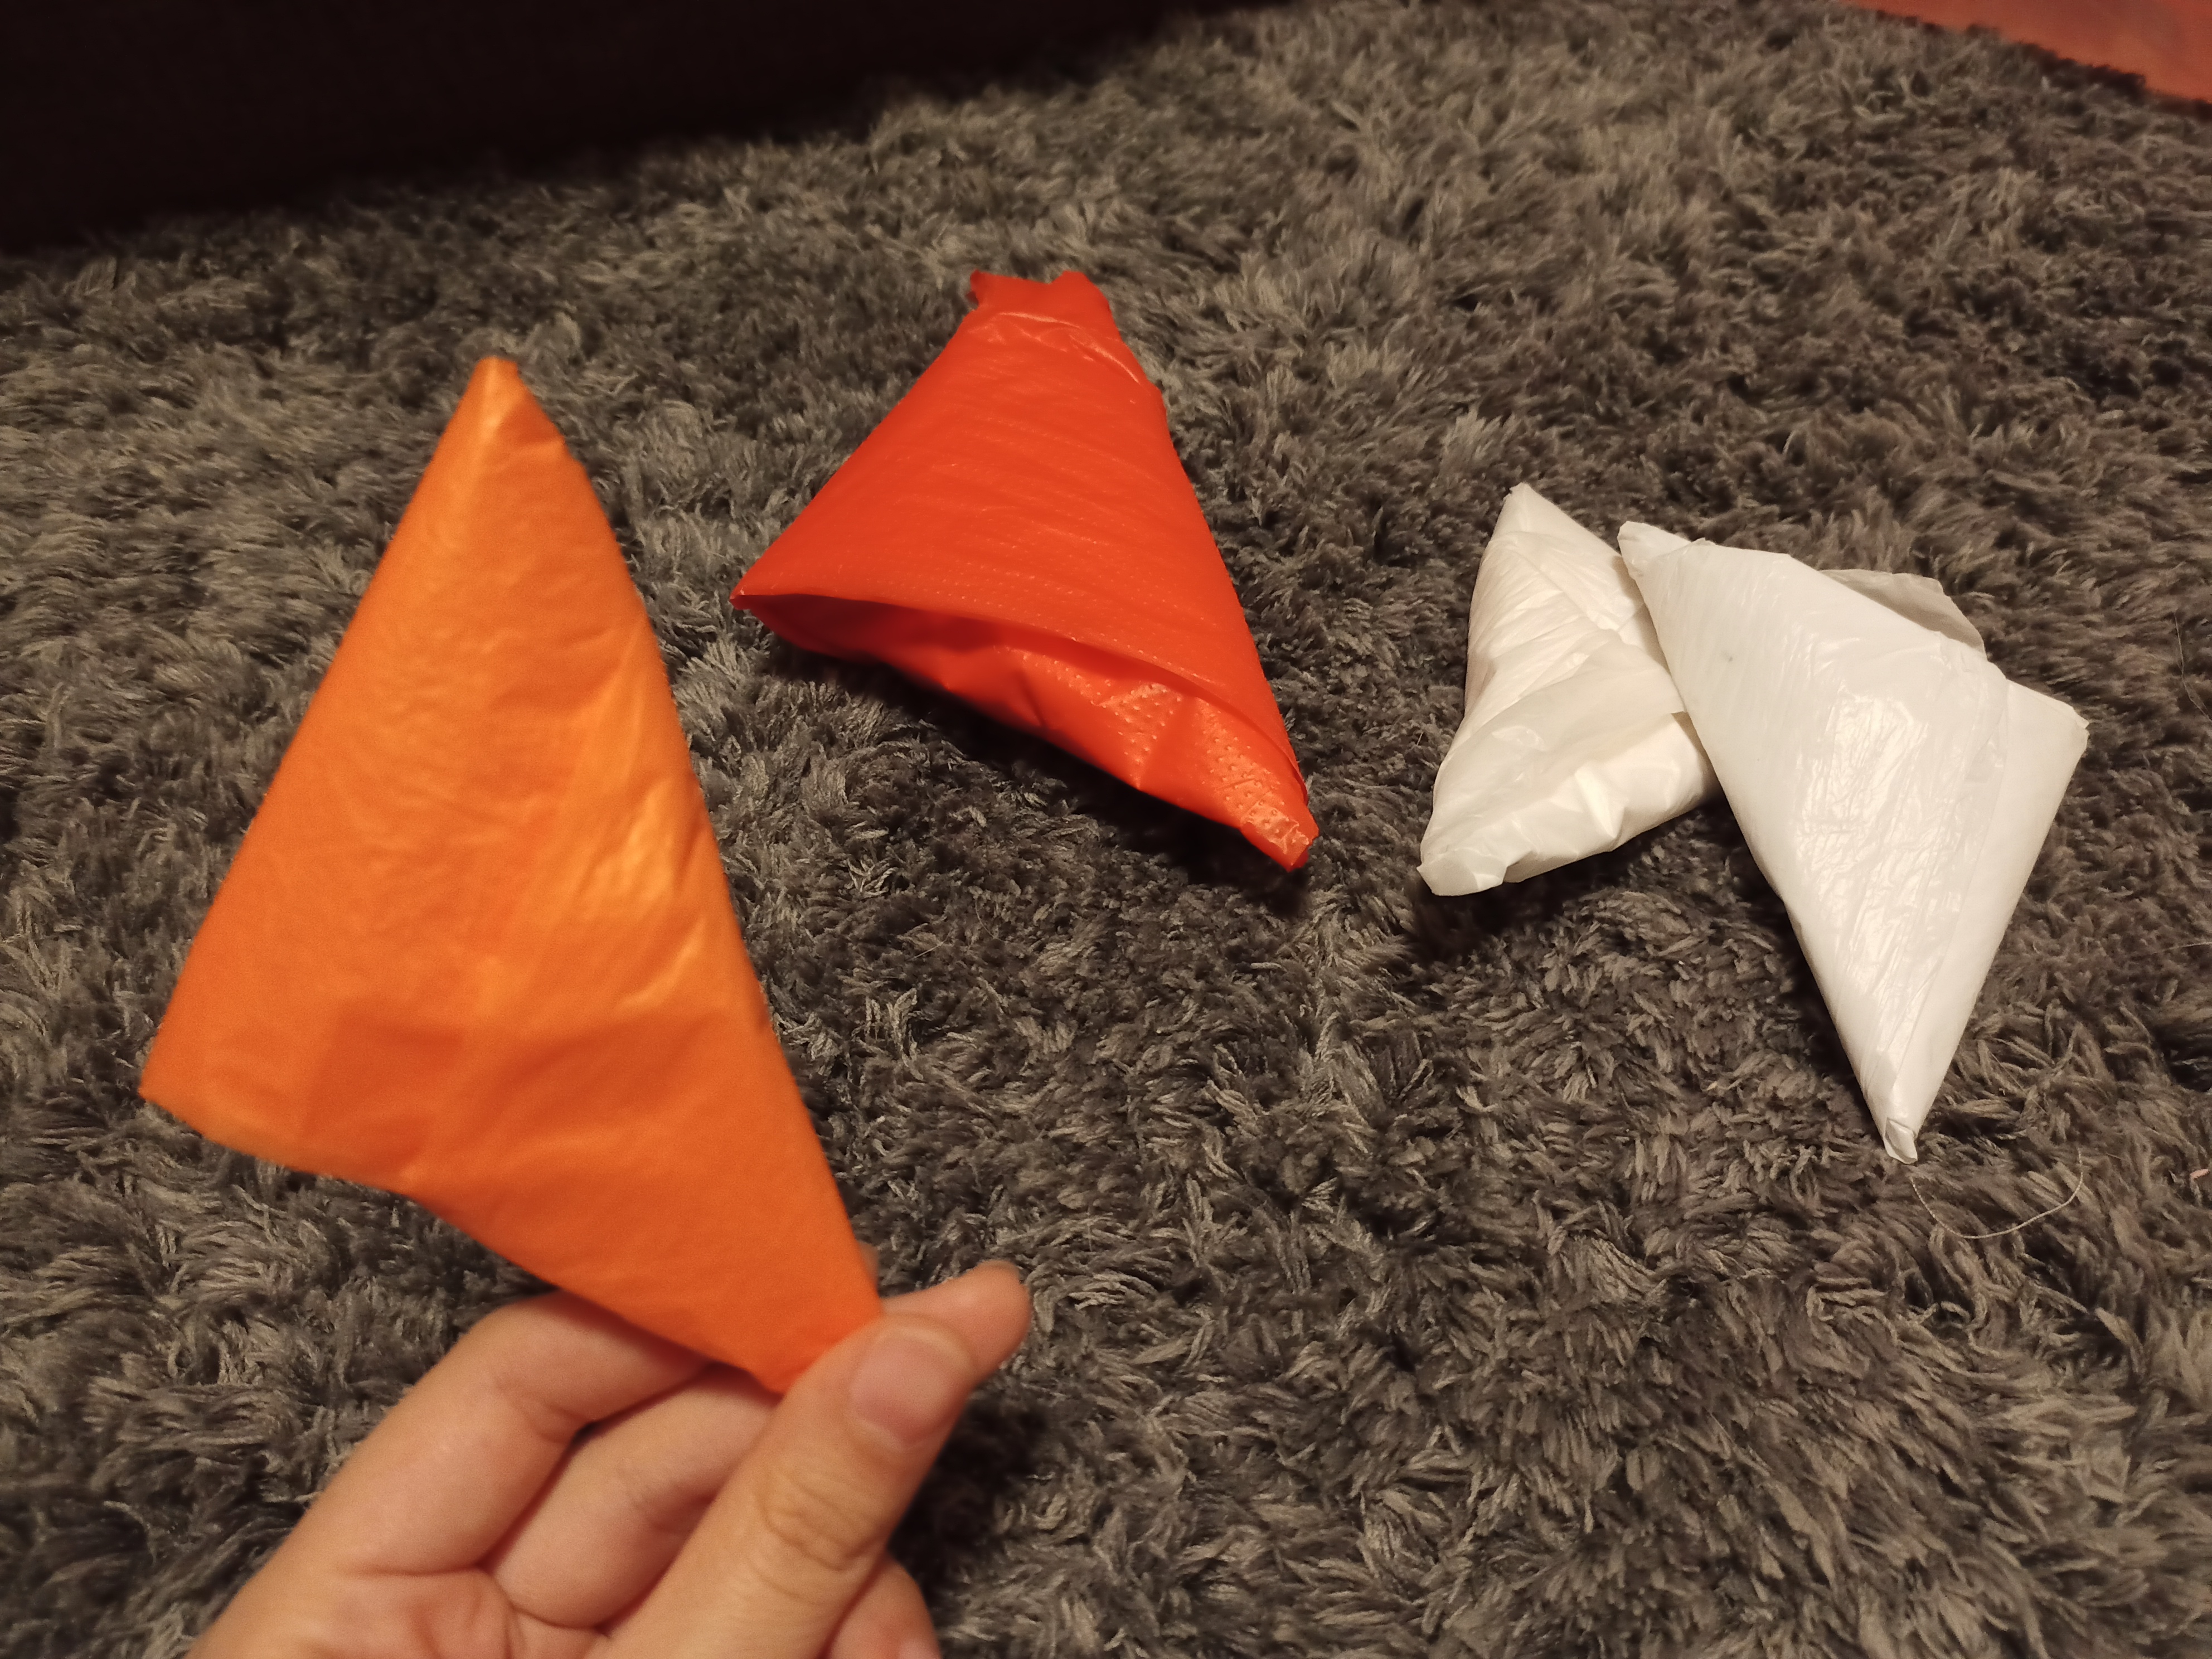 Malaysians will fold their plastic bags intro neat triangles when going cuti-cuti malaysia.